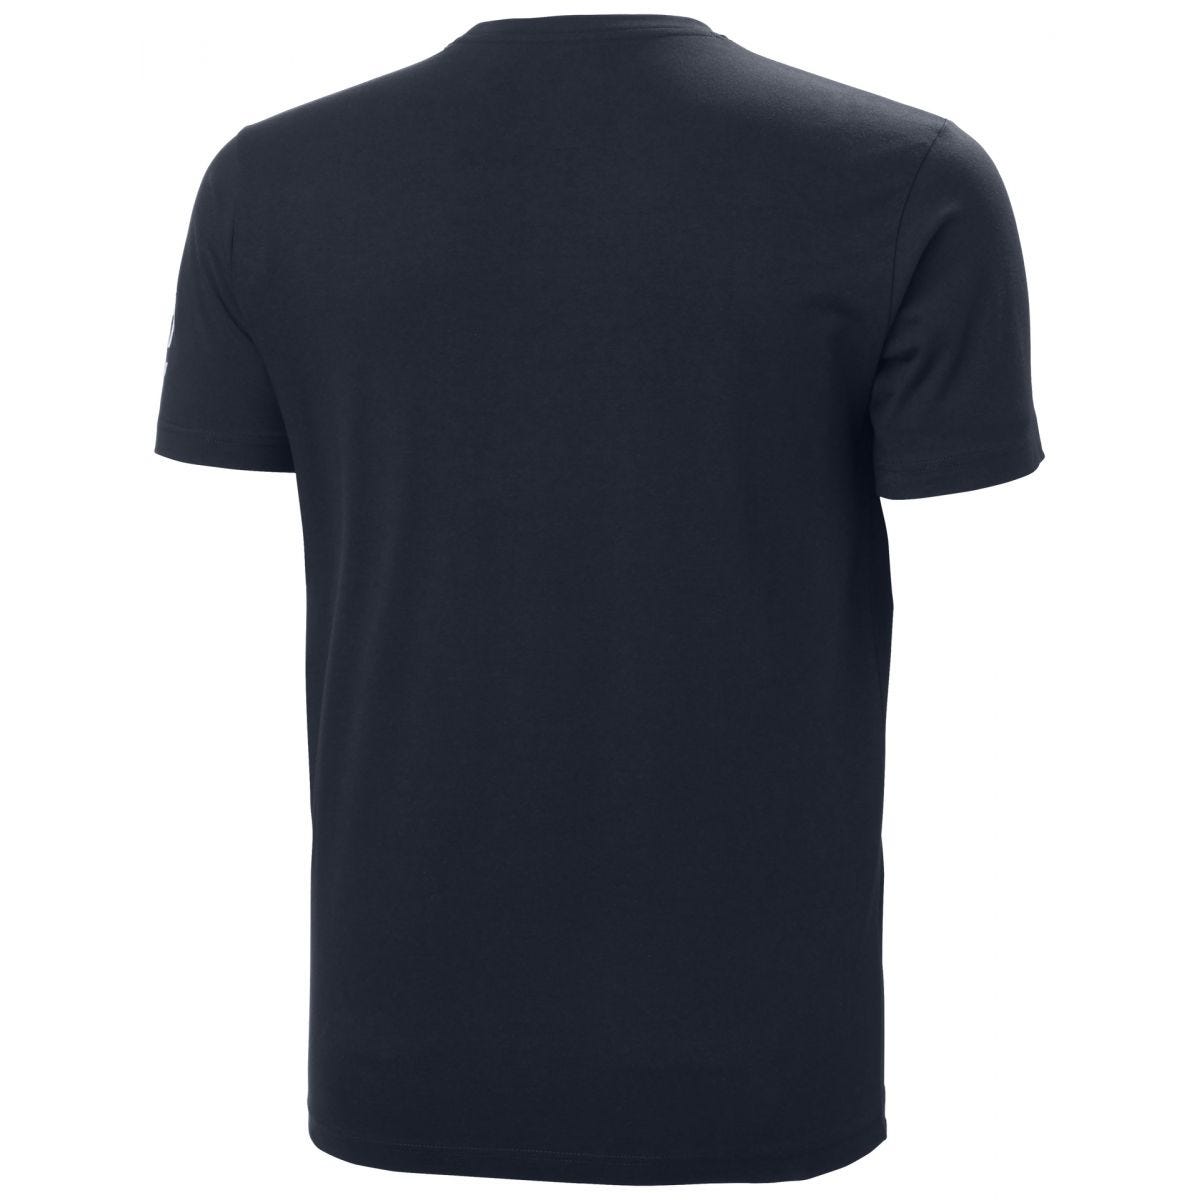 Tee-shirt Kensington Marine - Helly Hansen - Taille 2XL 1